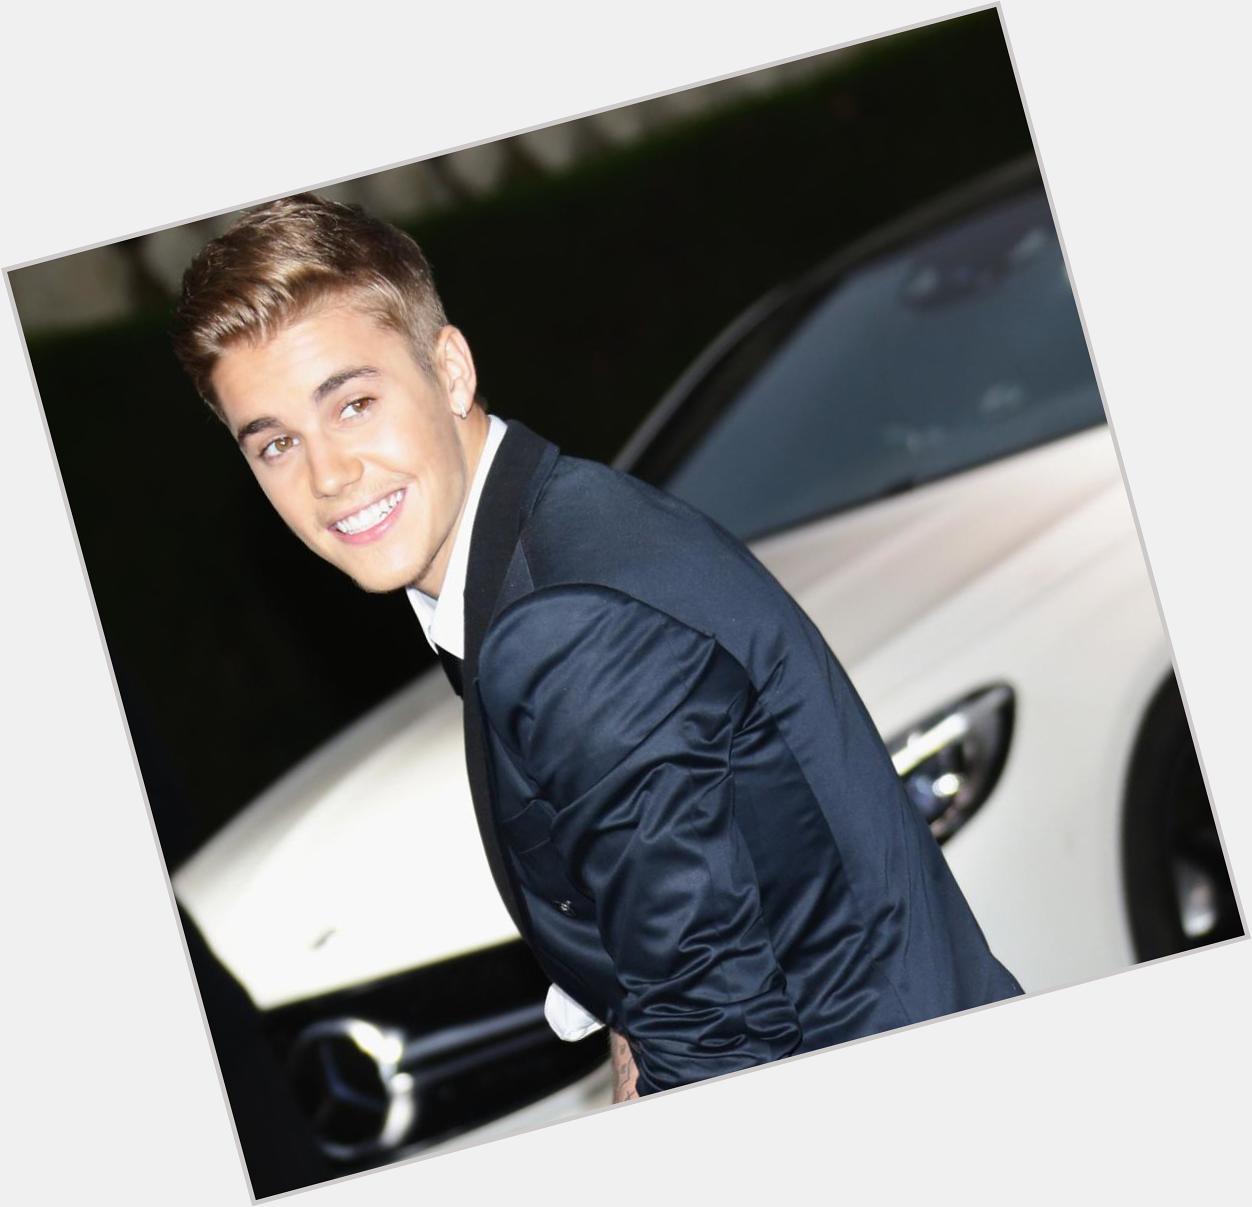   21 reasons to ~*LOVE*~           Happy birthday, Justin!  